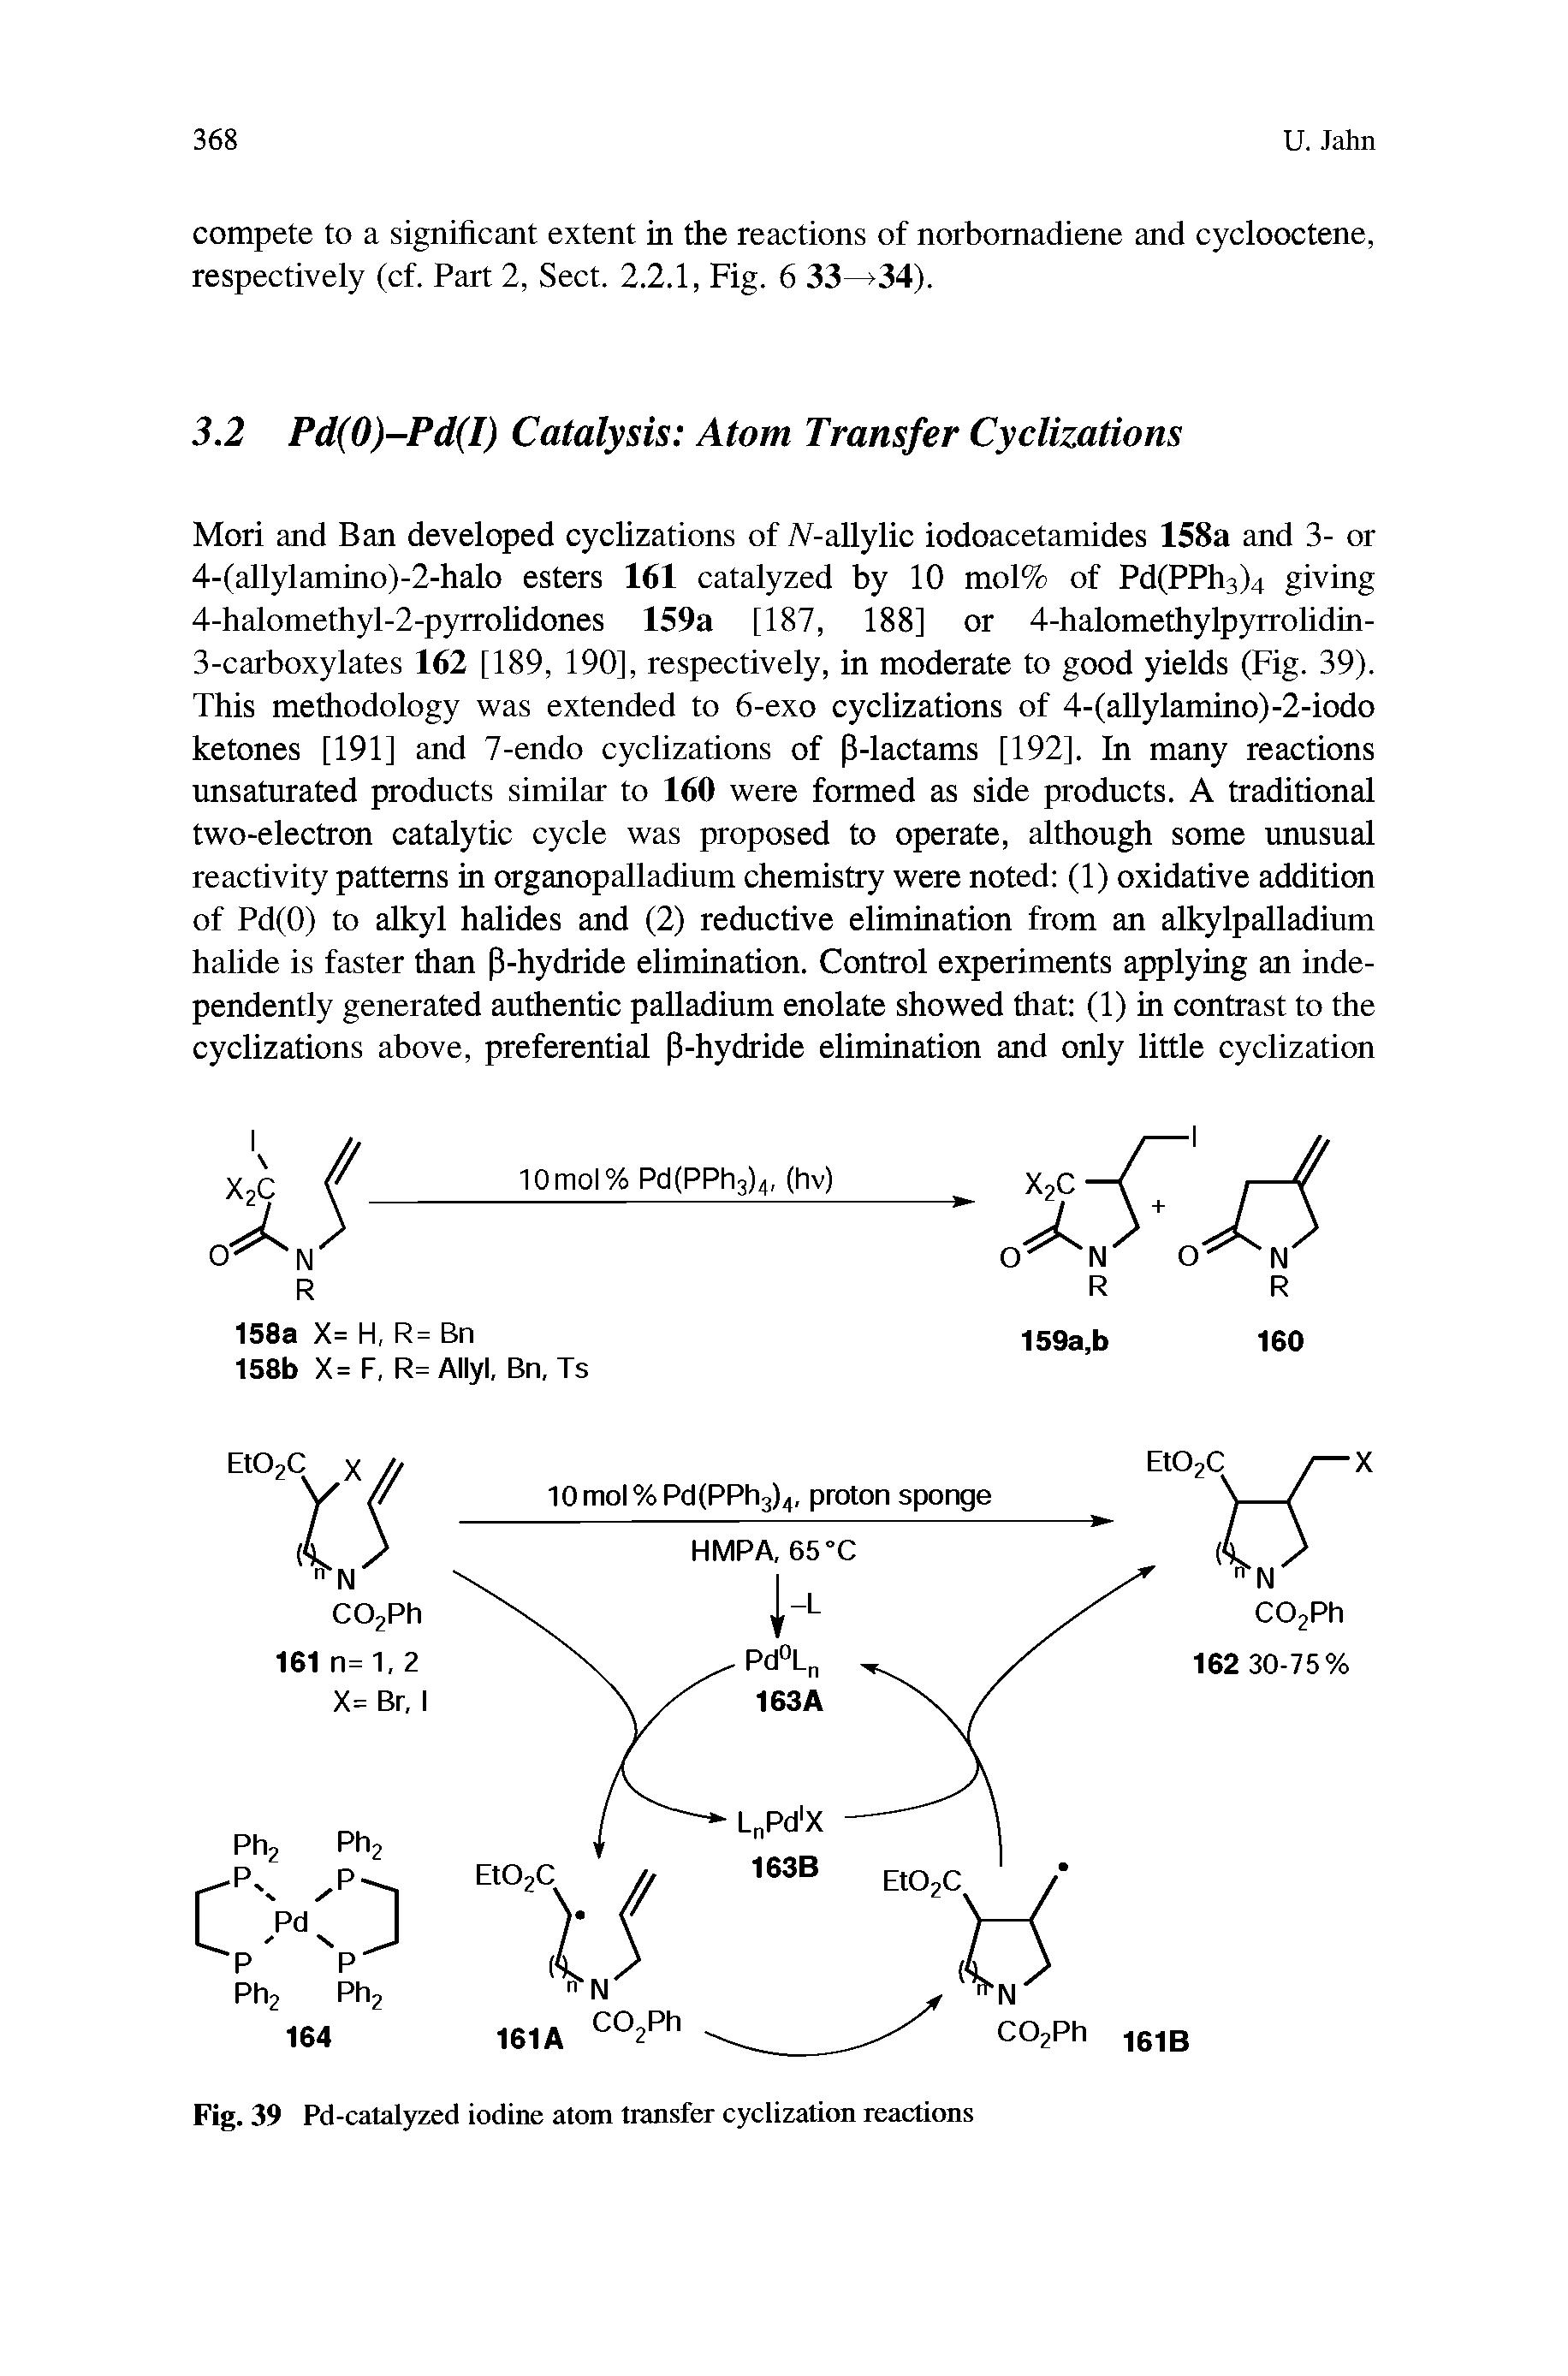 Fig. 39 Pd-catalyzed iodine atom transfer cyclization reactions...